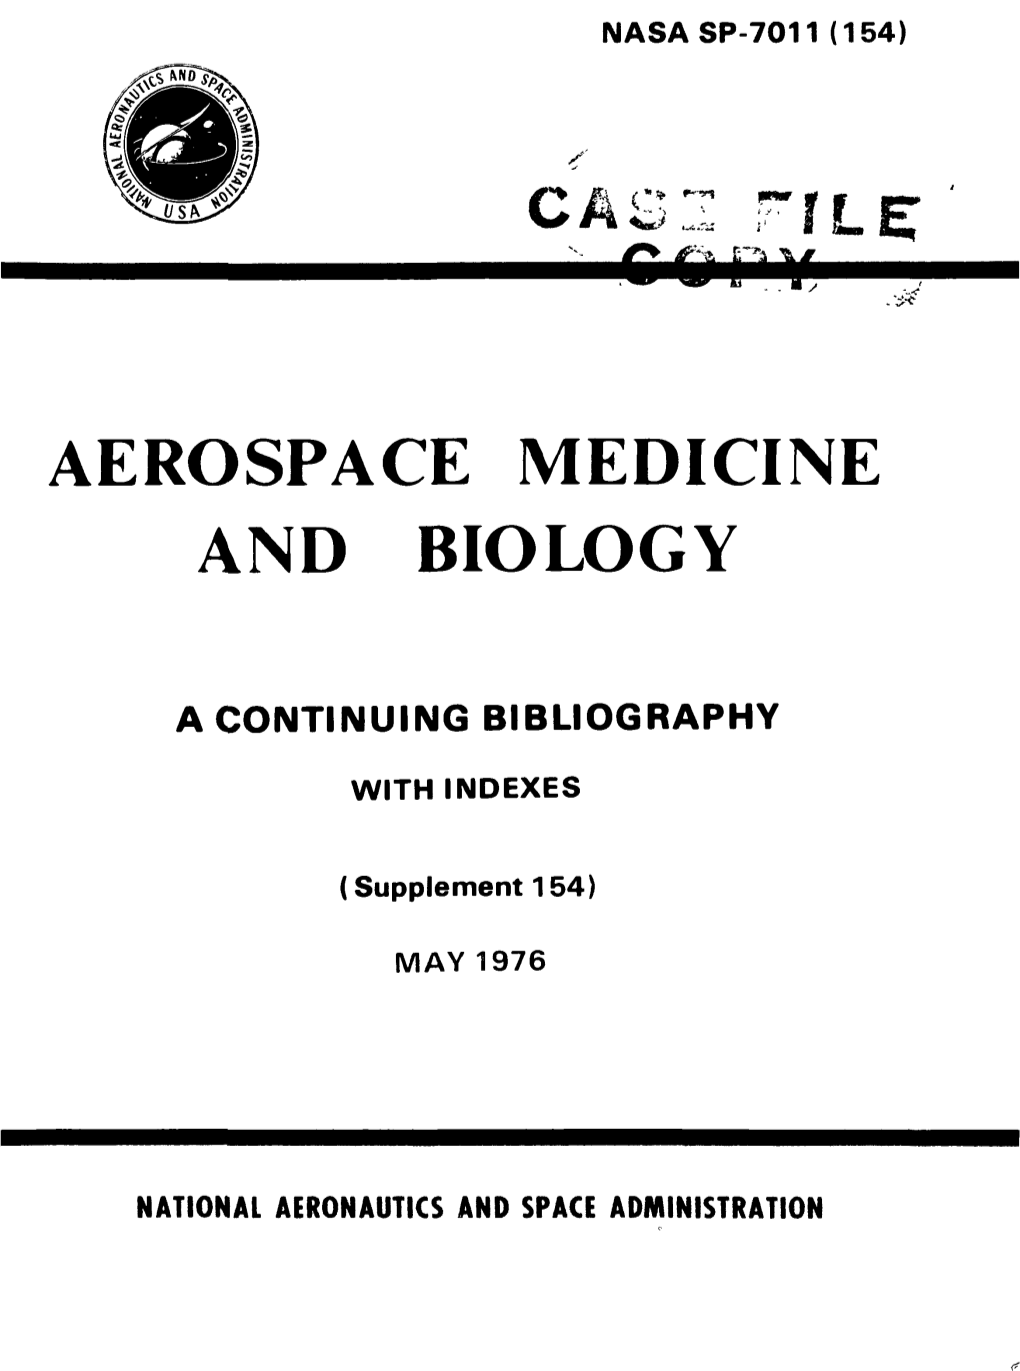 Aero Spa Medicine and Biology